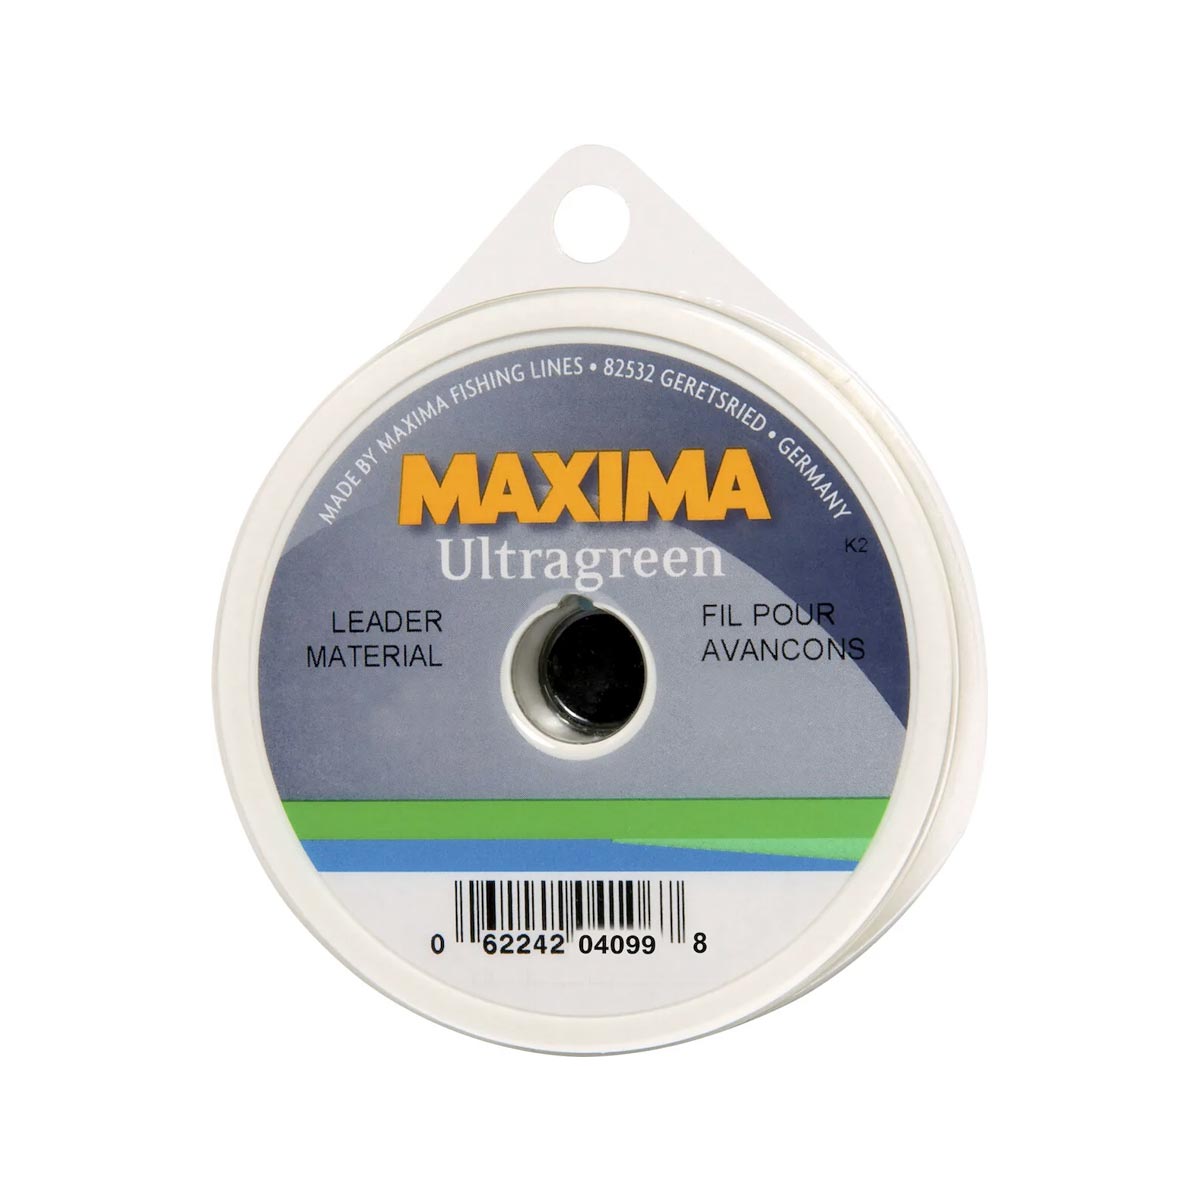 Maxima One Shot Ultragreen Monofilament Fishing Line